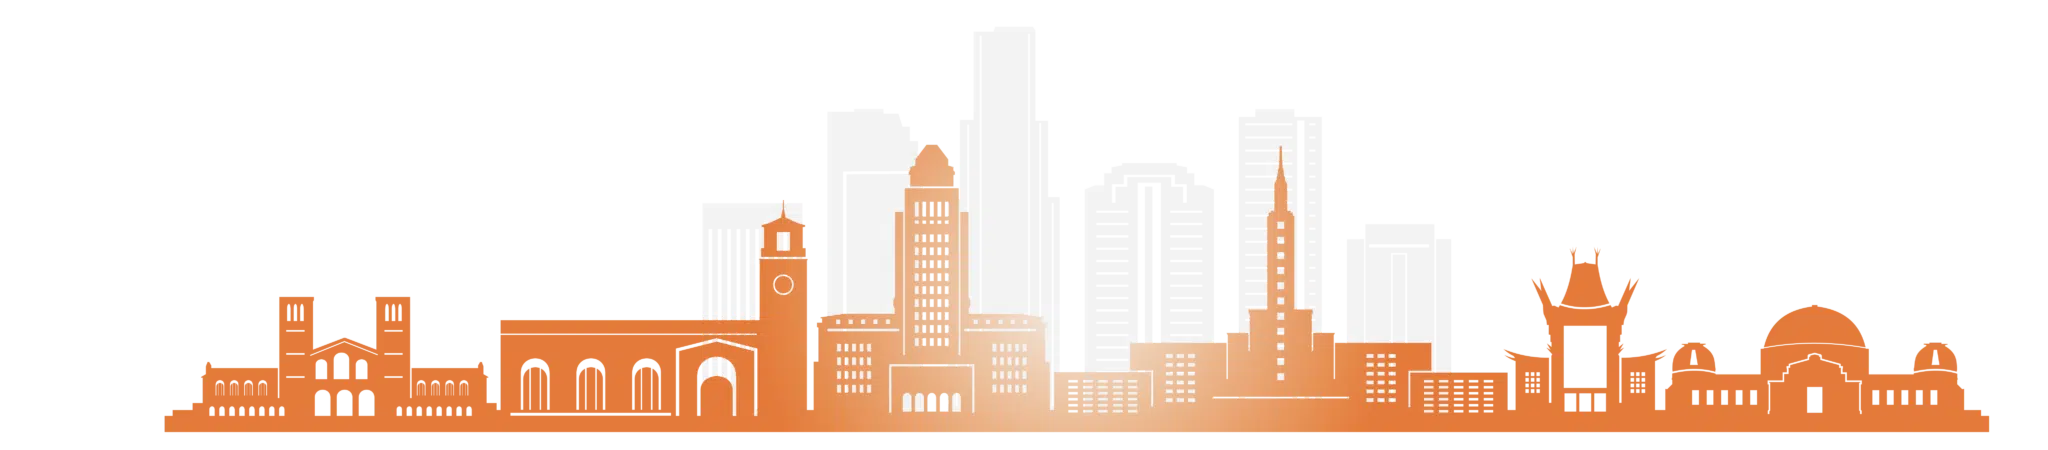 Orange graphic of the Los Angeles, California skyline.